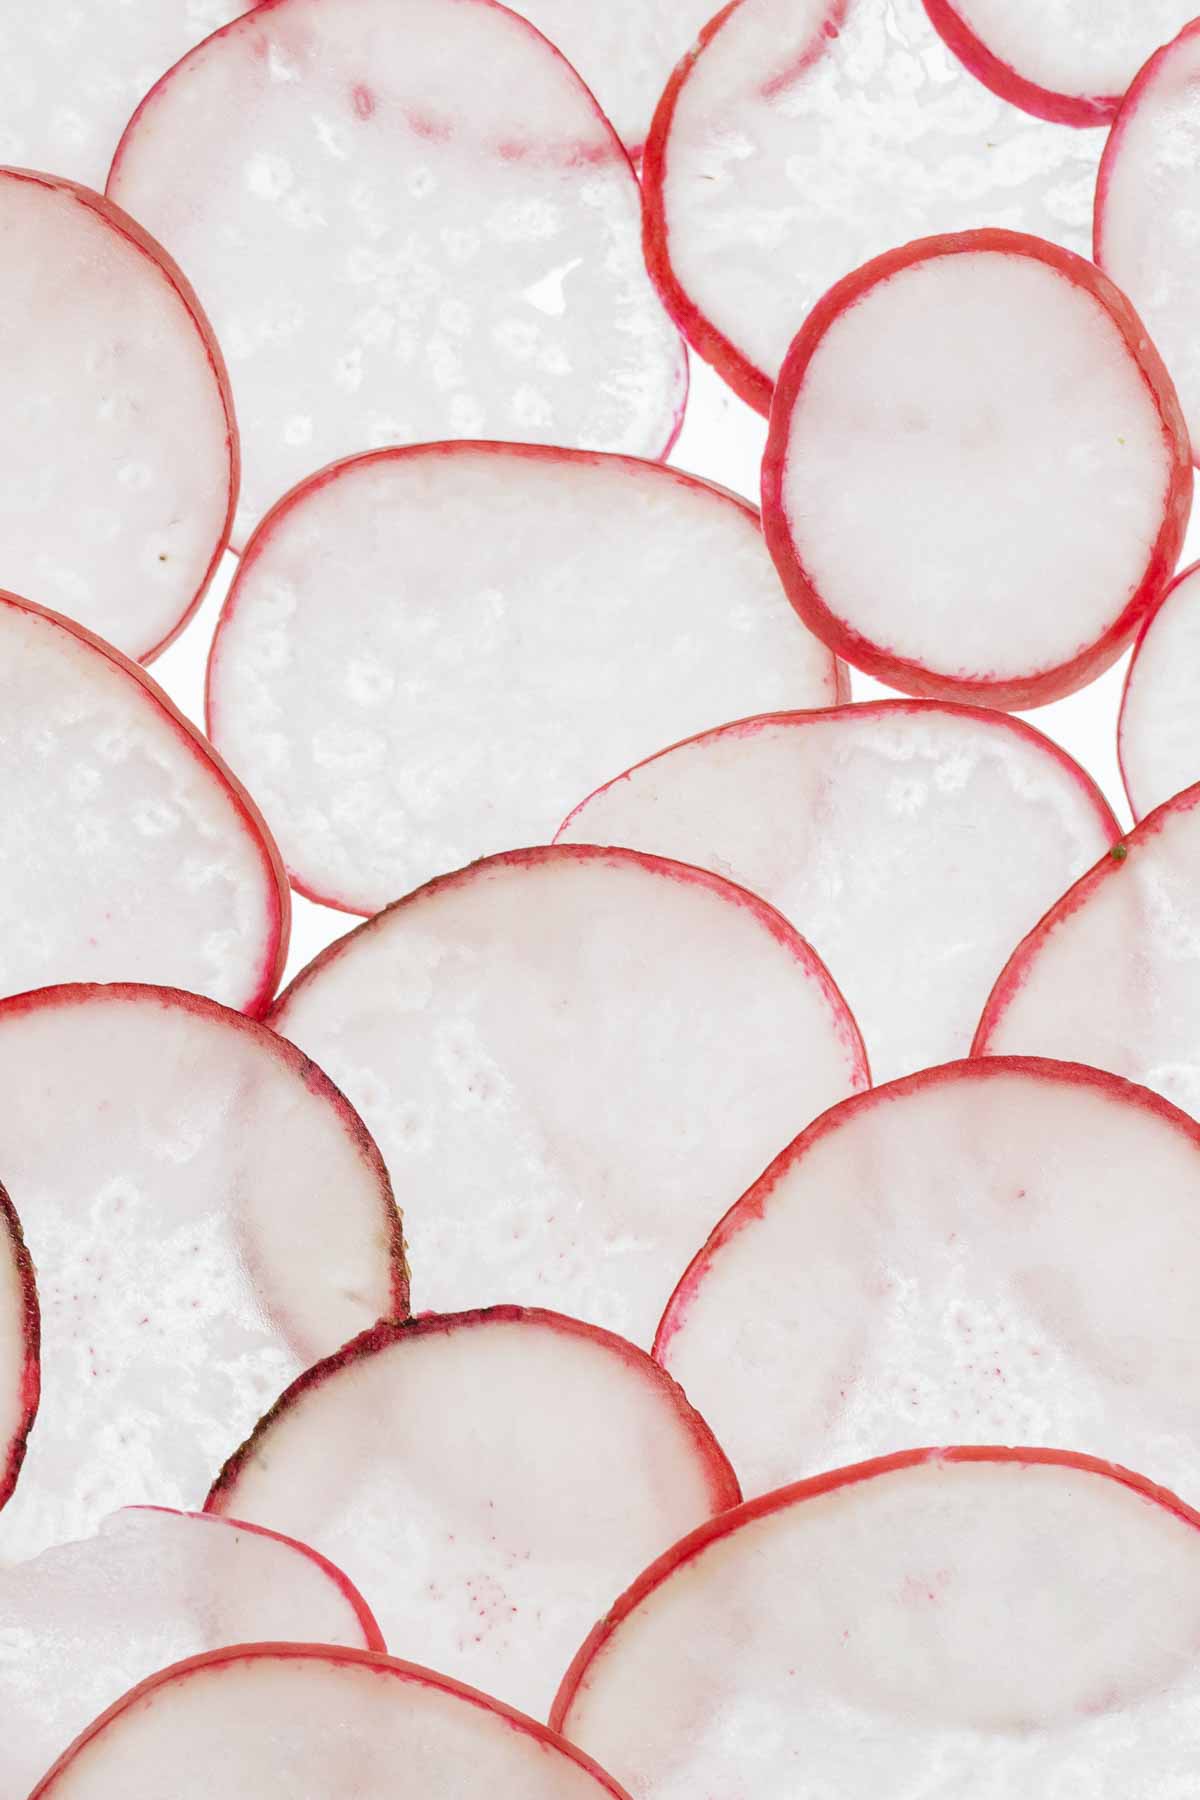 Slices of radishes.